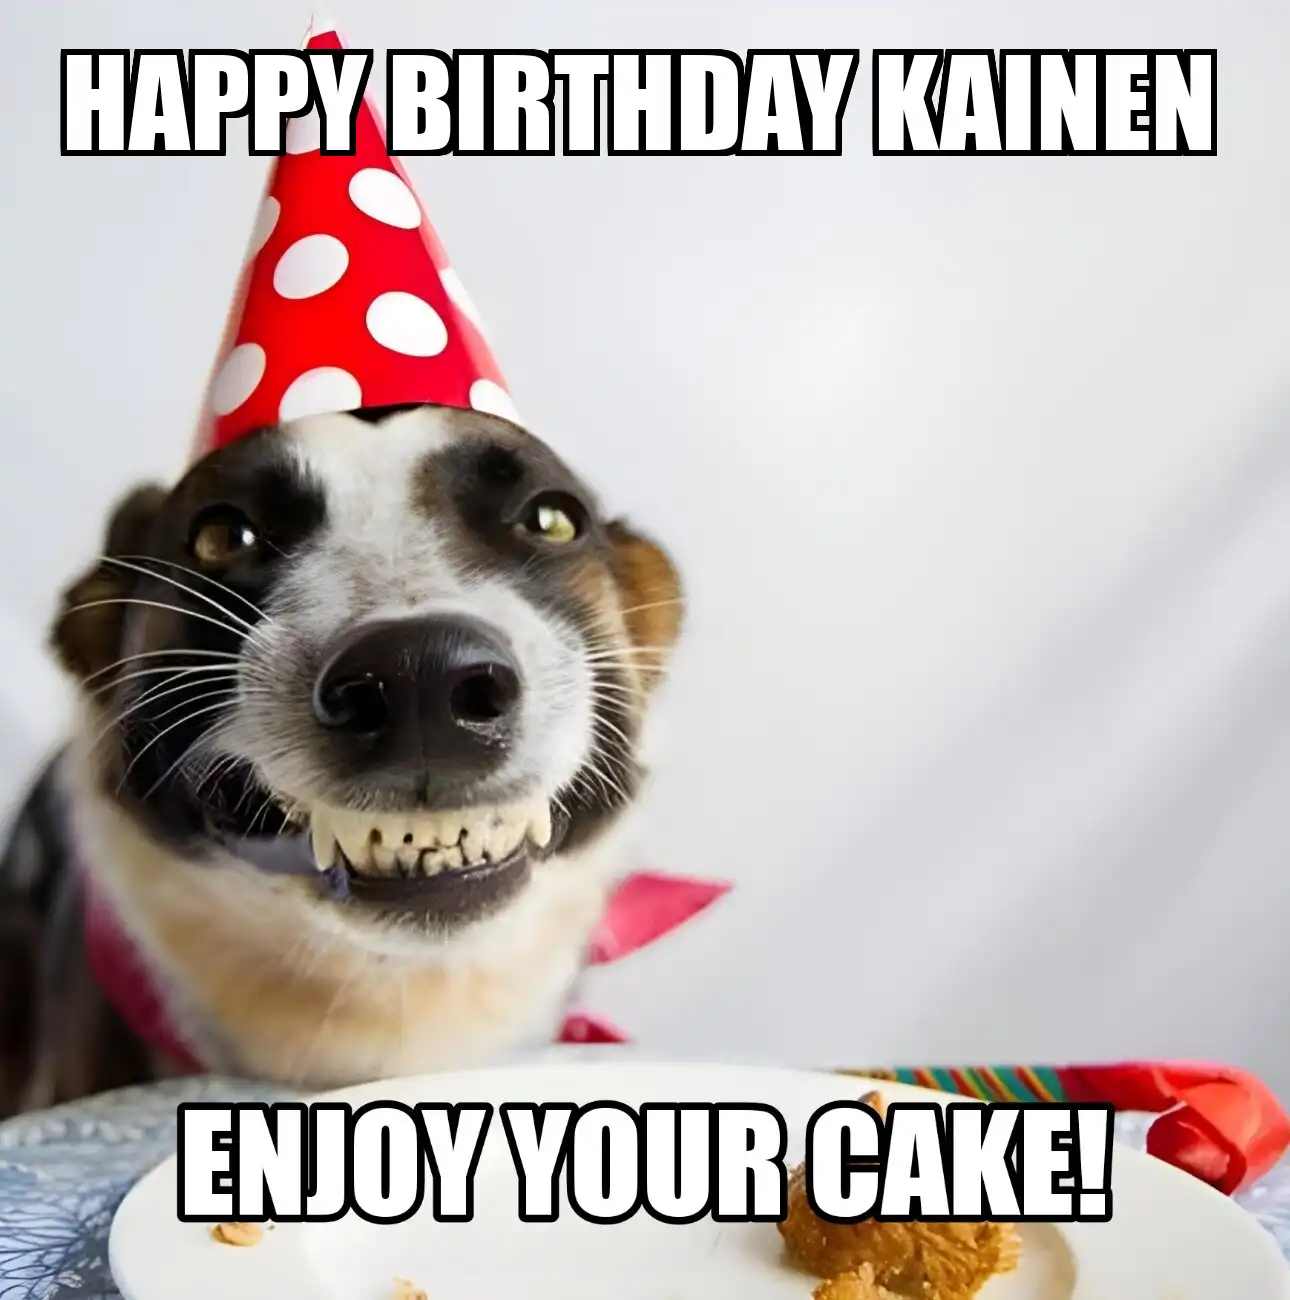 Happy Birthday Kainen Enjoy Your Cake Dog Meme